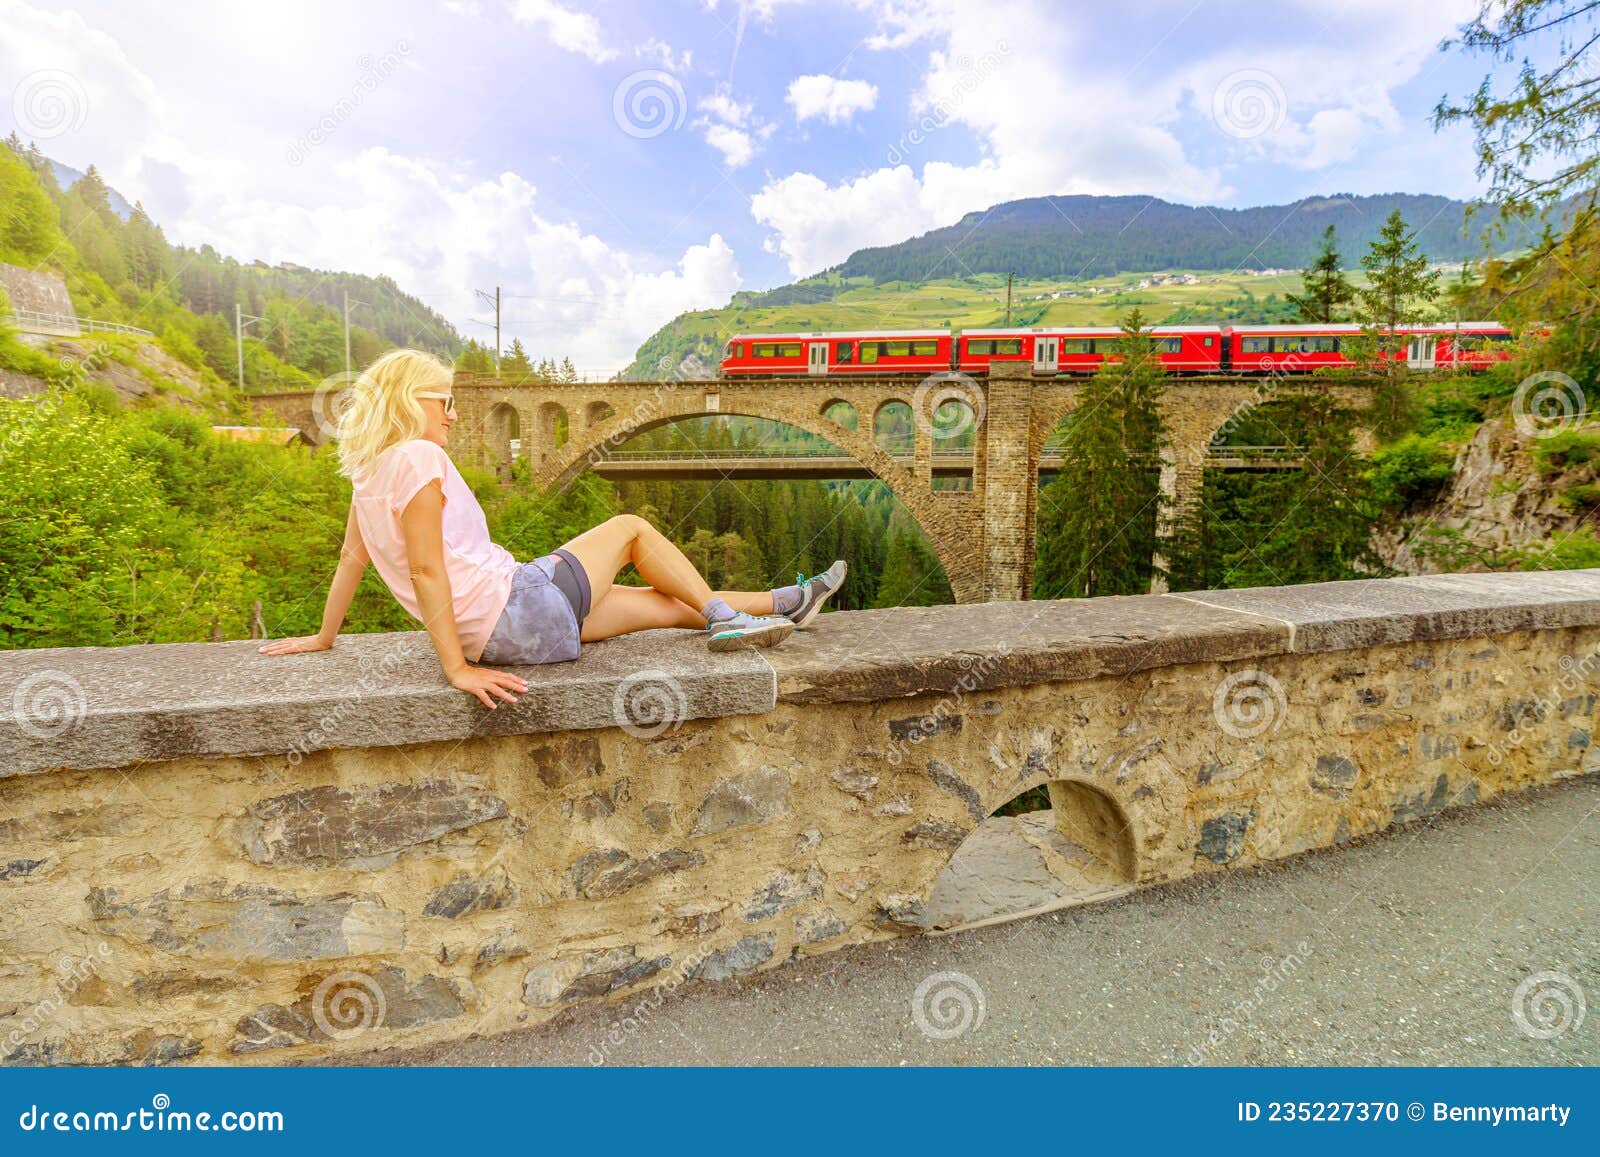 woman on solis viaduct of swiss railway